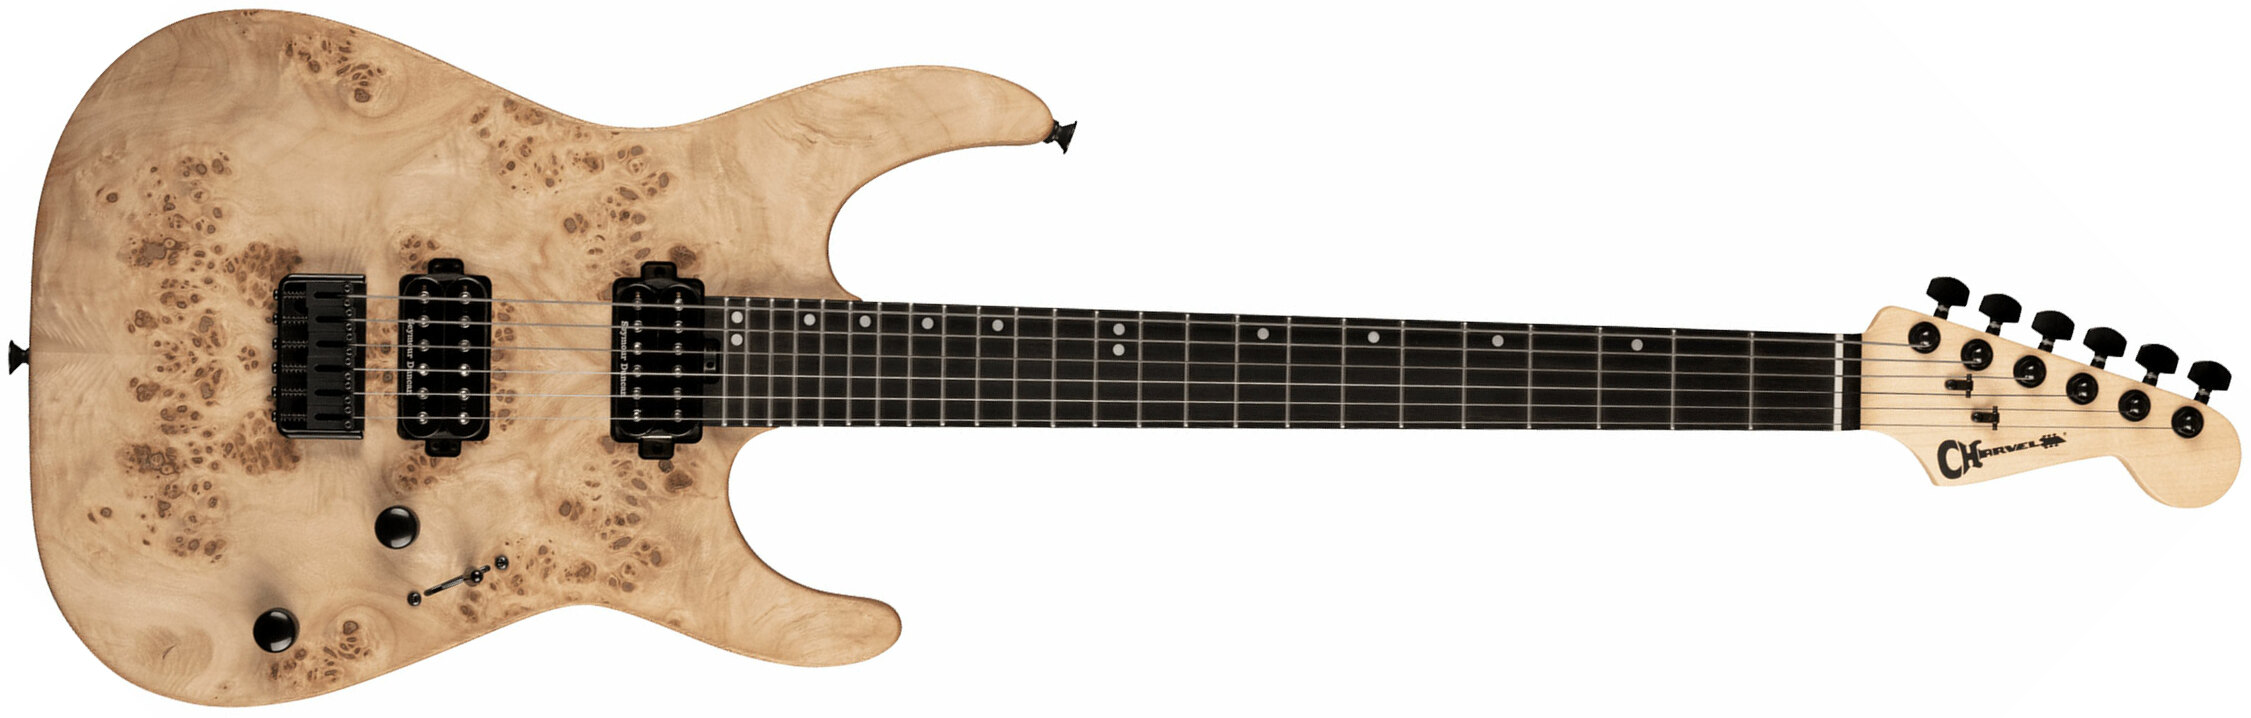 Charvel Dinky Dk24 Hh Ht E Mahogany Poplar Burl Pro-mod 2h Seymour Duncan Eb - Desert Sand - Str shape electric guitar - Main picture